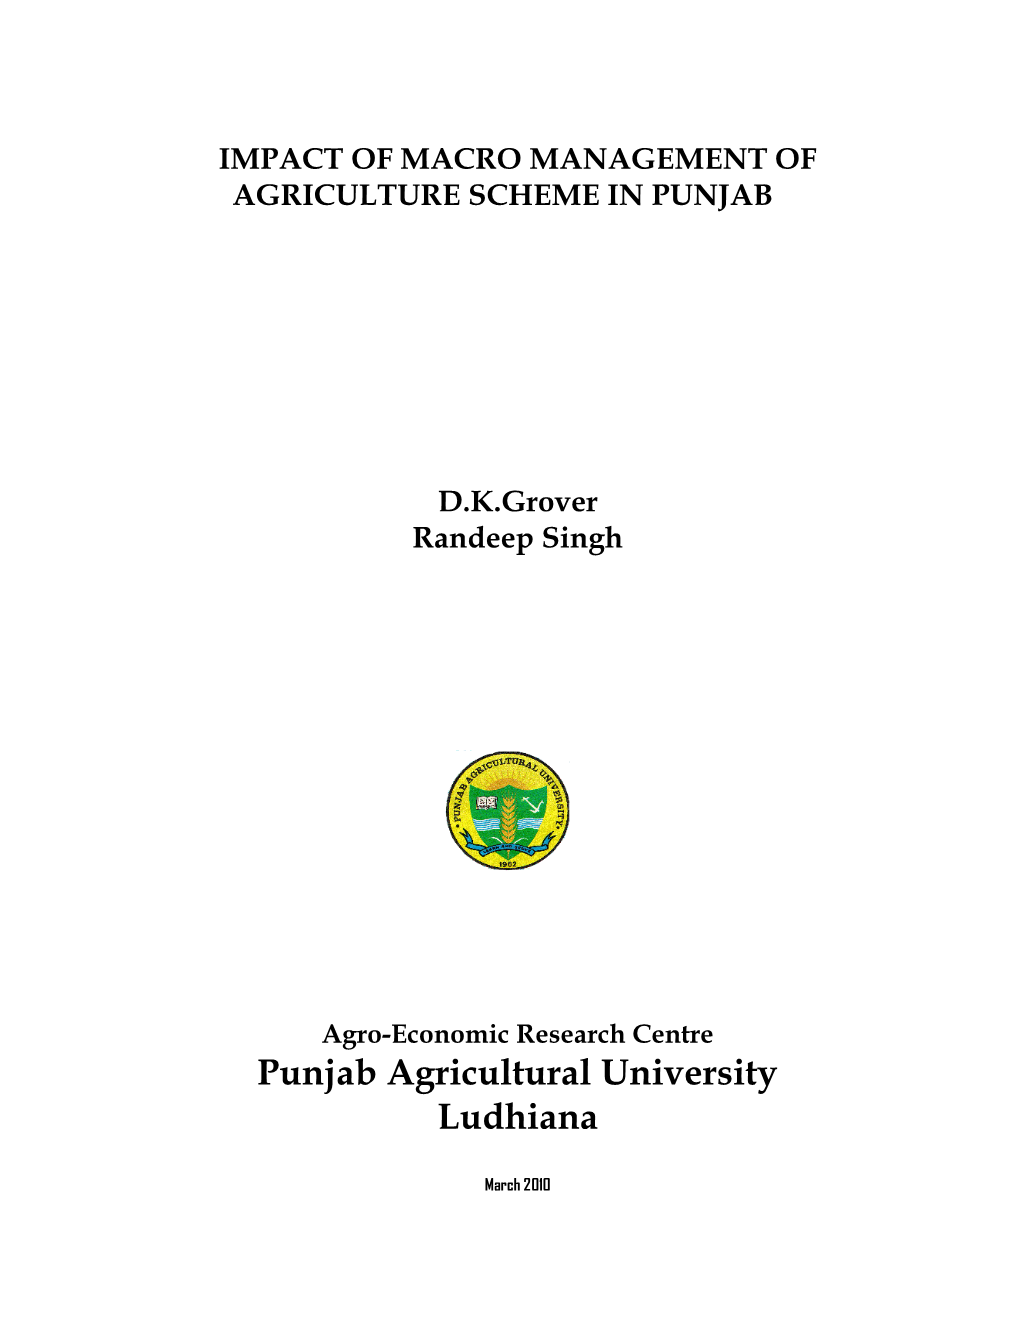 Punjab Agricultural University Ludhiana